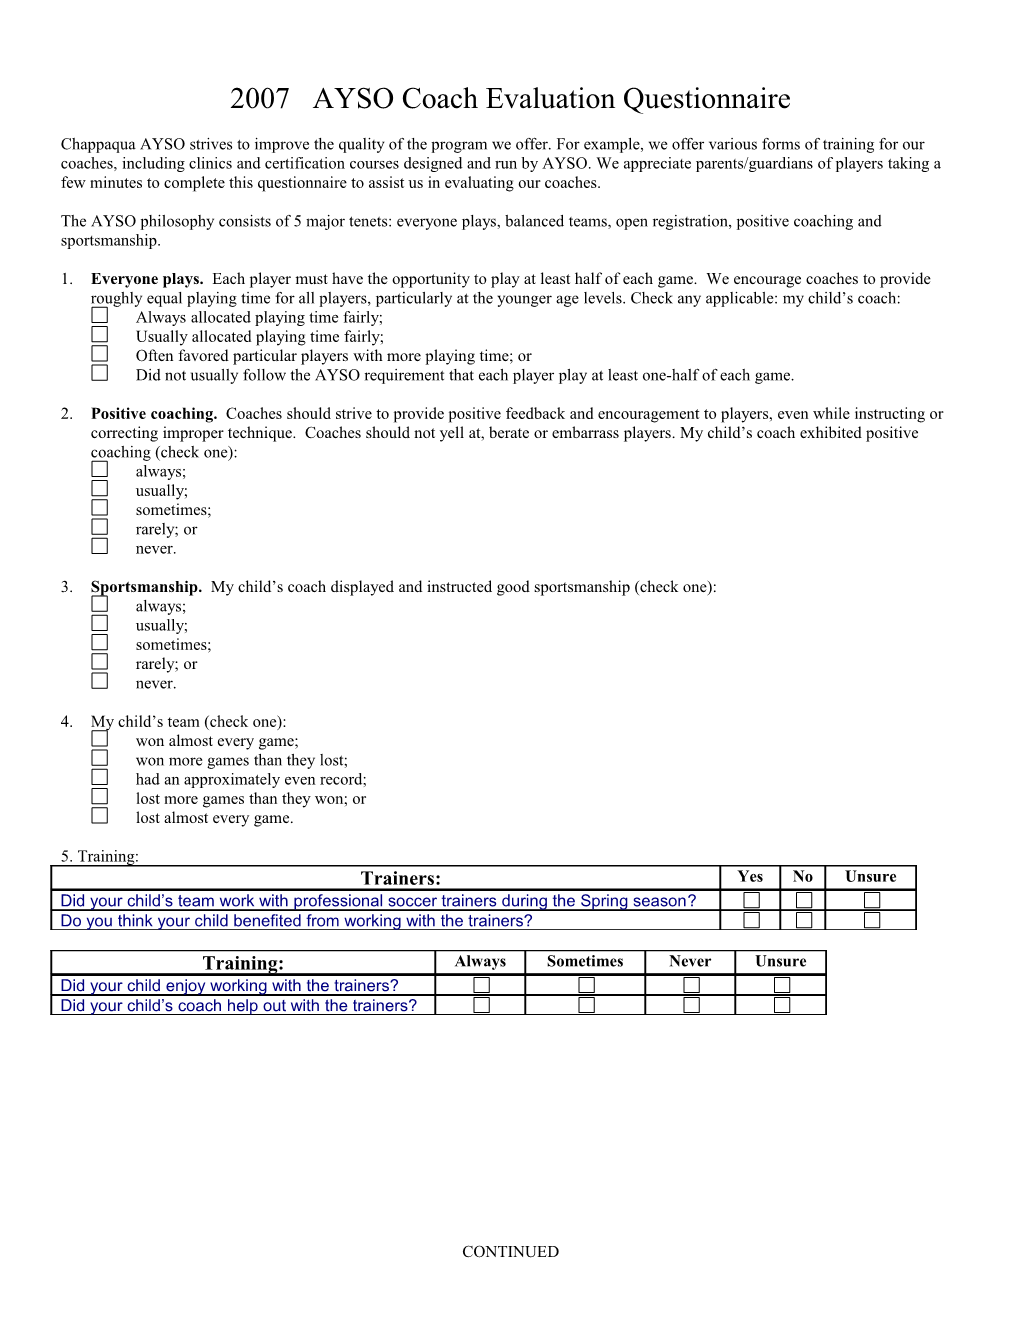 2003 Chappaqua AYSO Coach Evaluation, Page 2